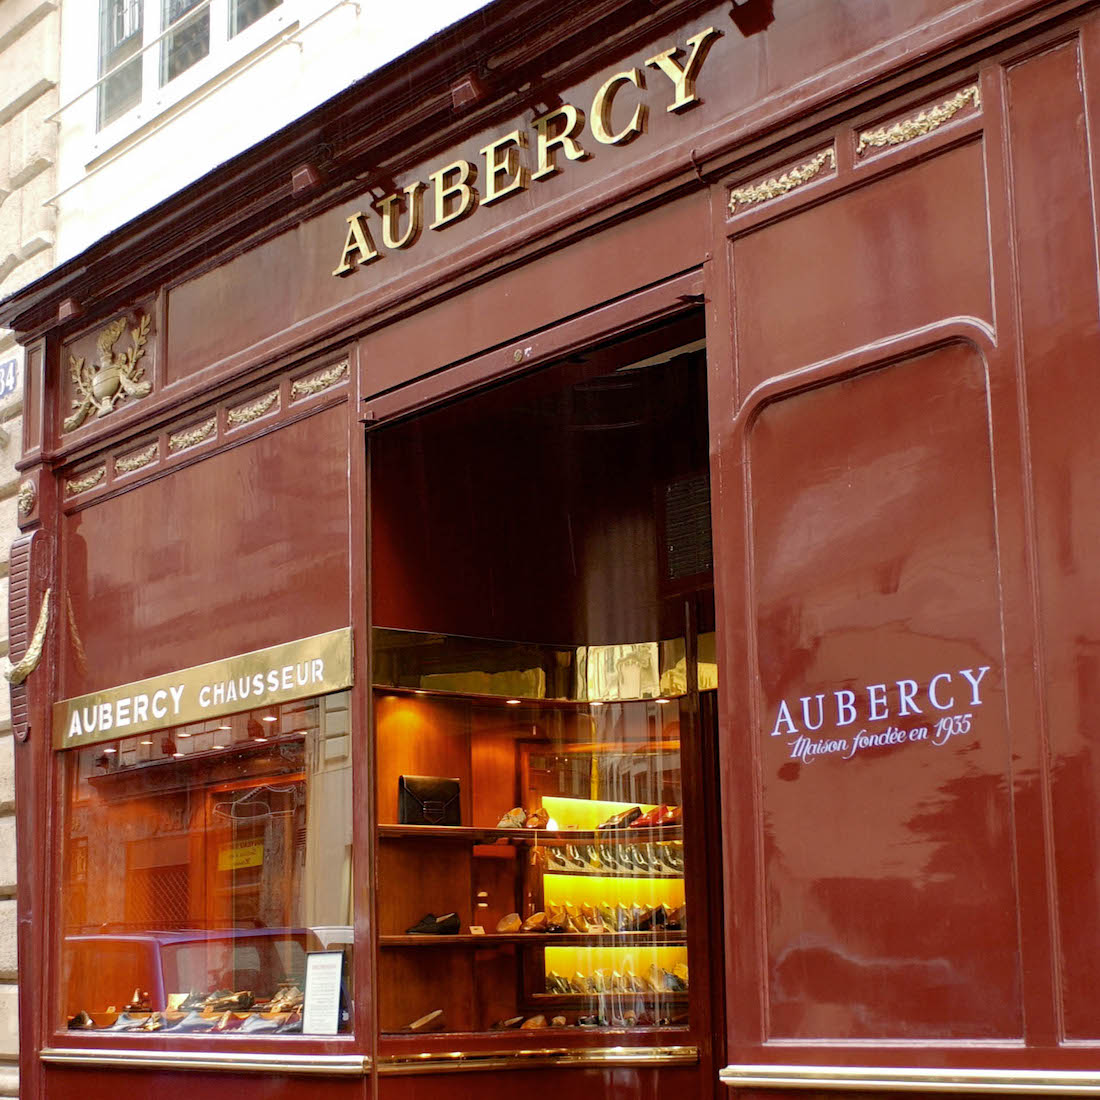 Home-Aubercy - Aubercy